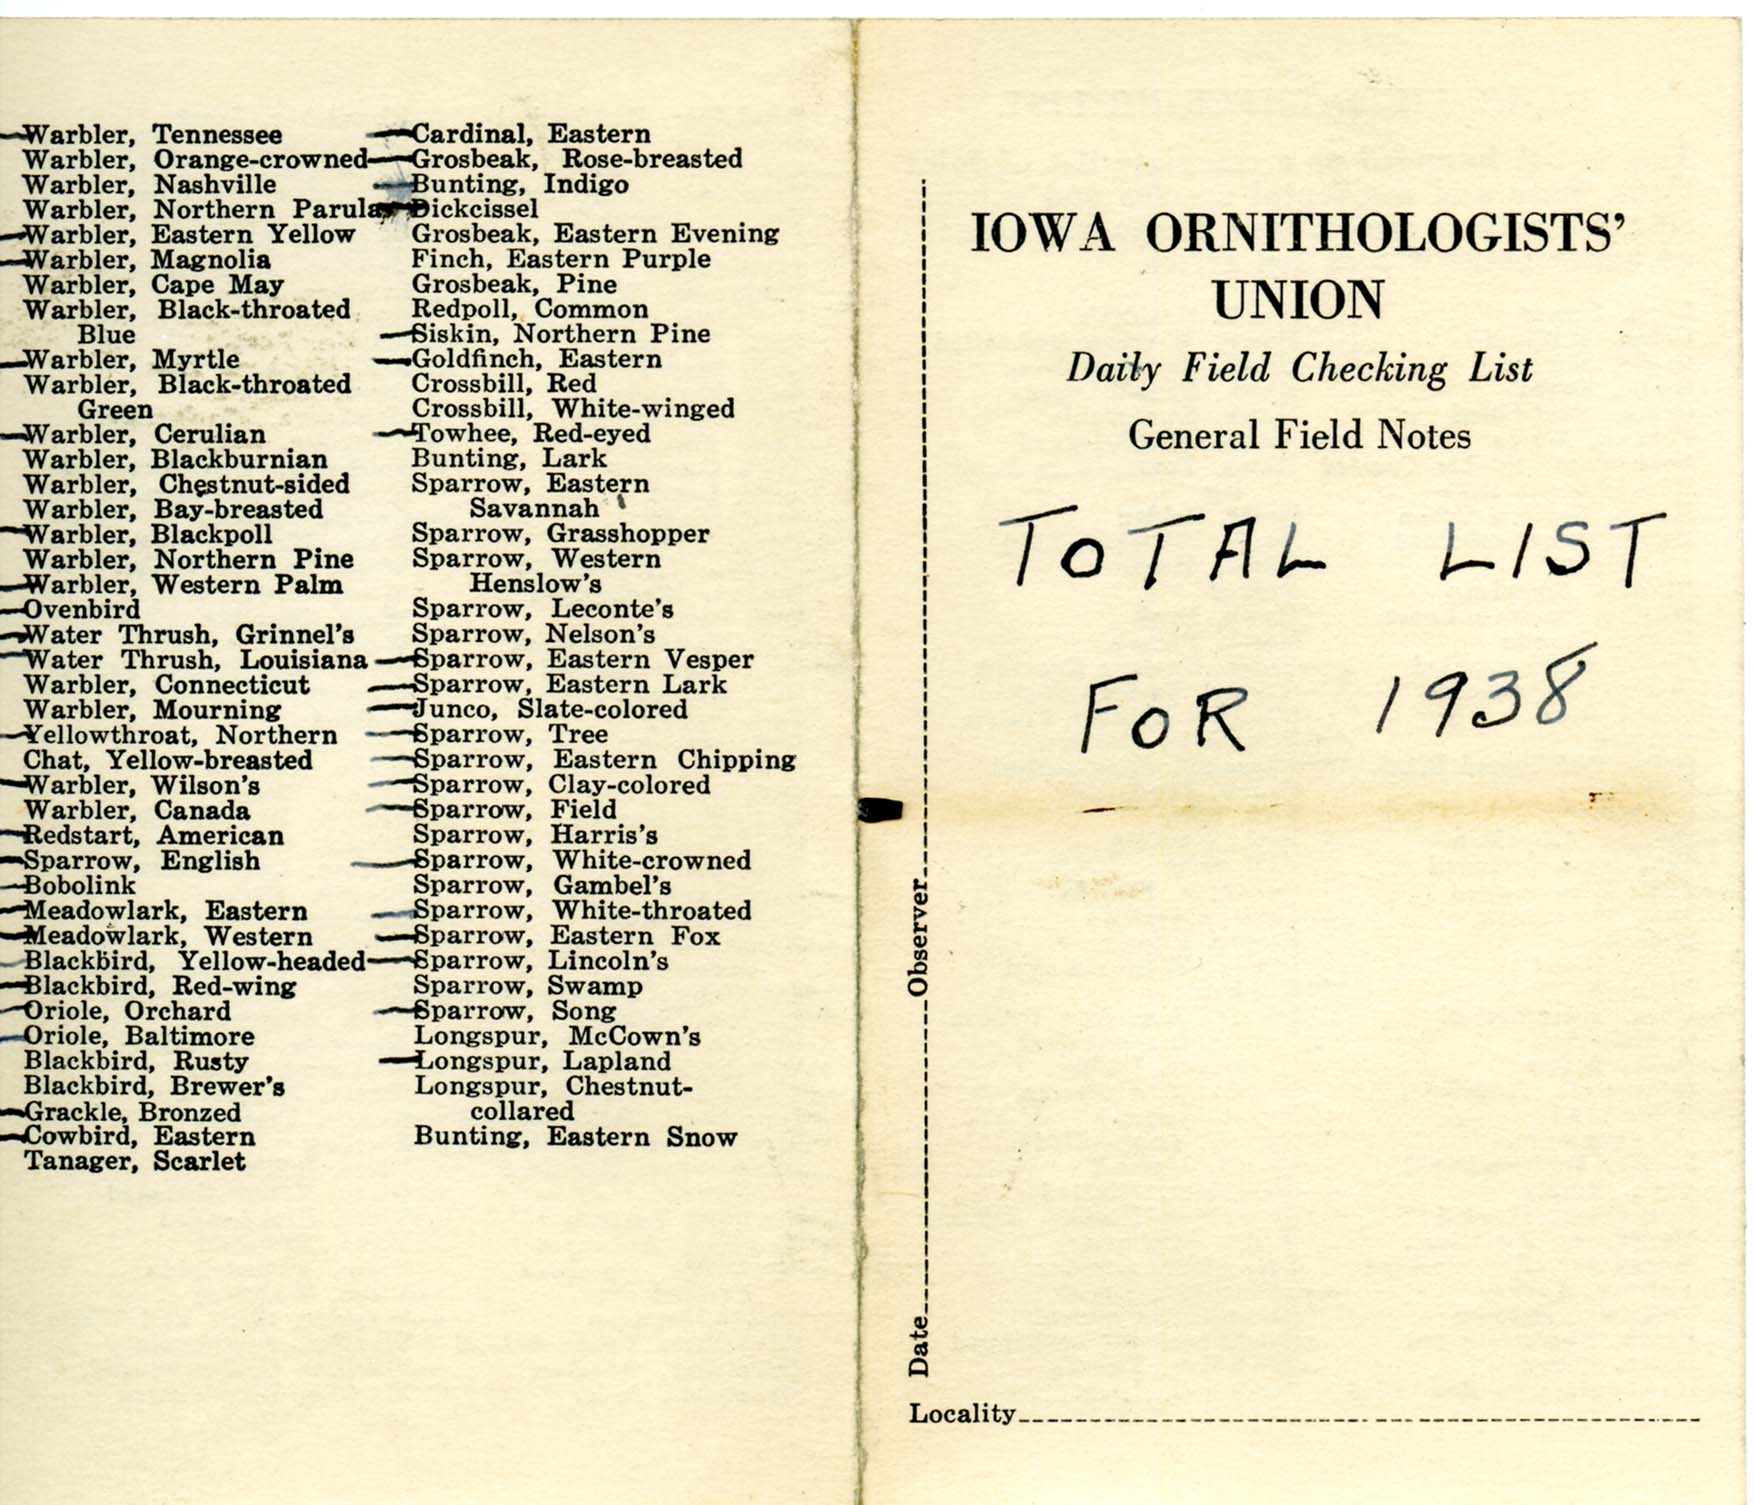 Daily field checking list by Walter Rosene, 1938